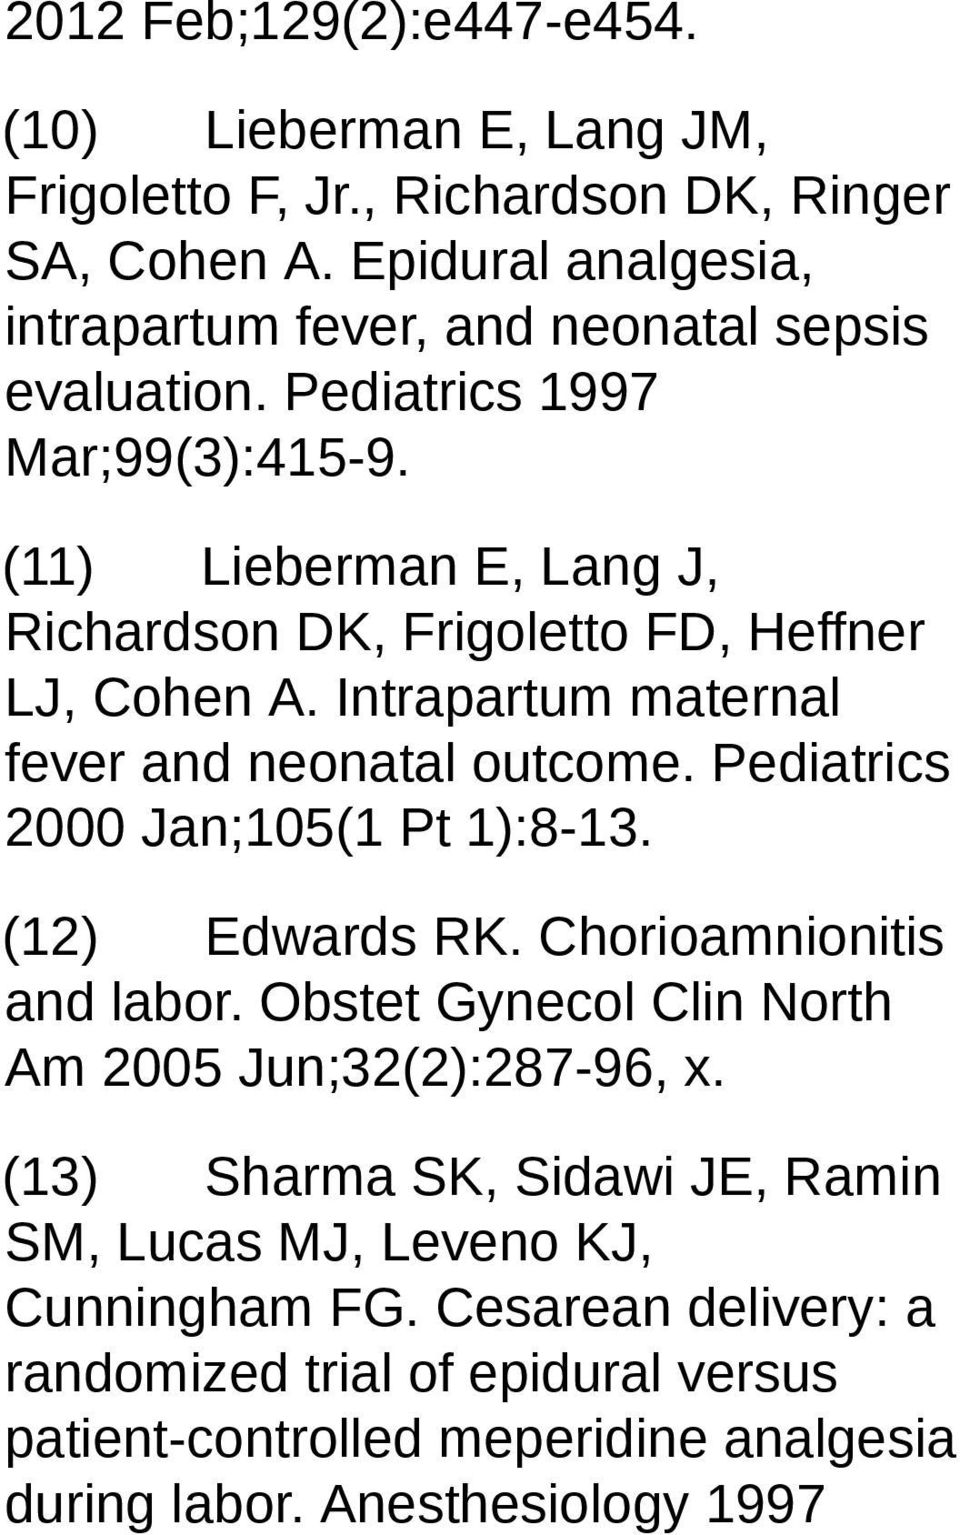 (11) Lieberman E, Lang J, Richardson DK, Frigoletto FD, Heffner LJ, Cohen A. Intrapartum maternal fever and neonatal outcome. Pediatrics 2000 Jan;105(1 Pt 1):8-13.